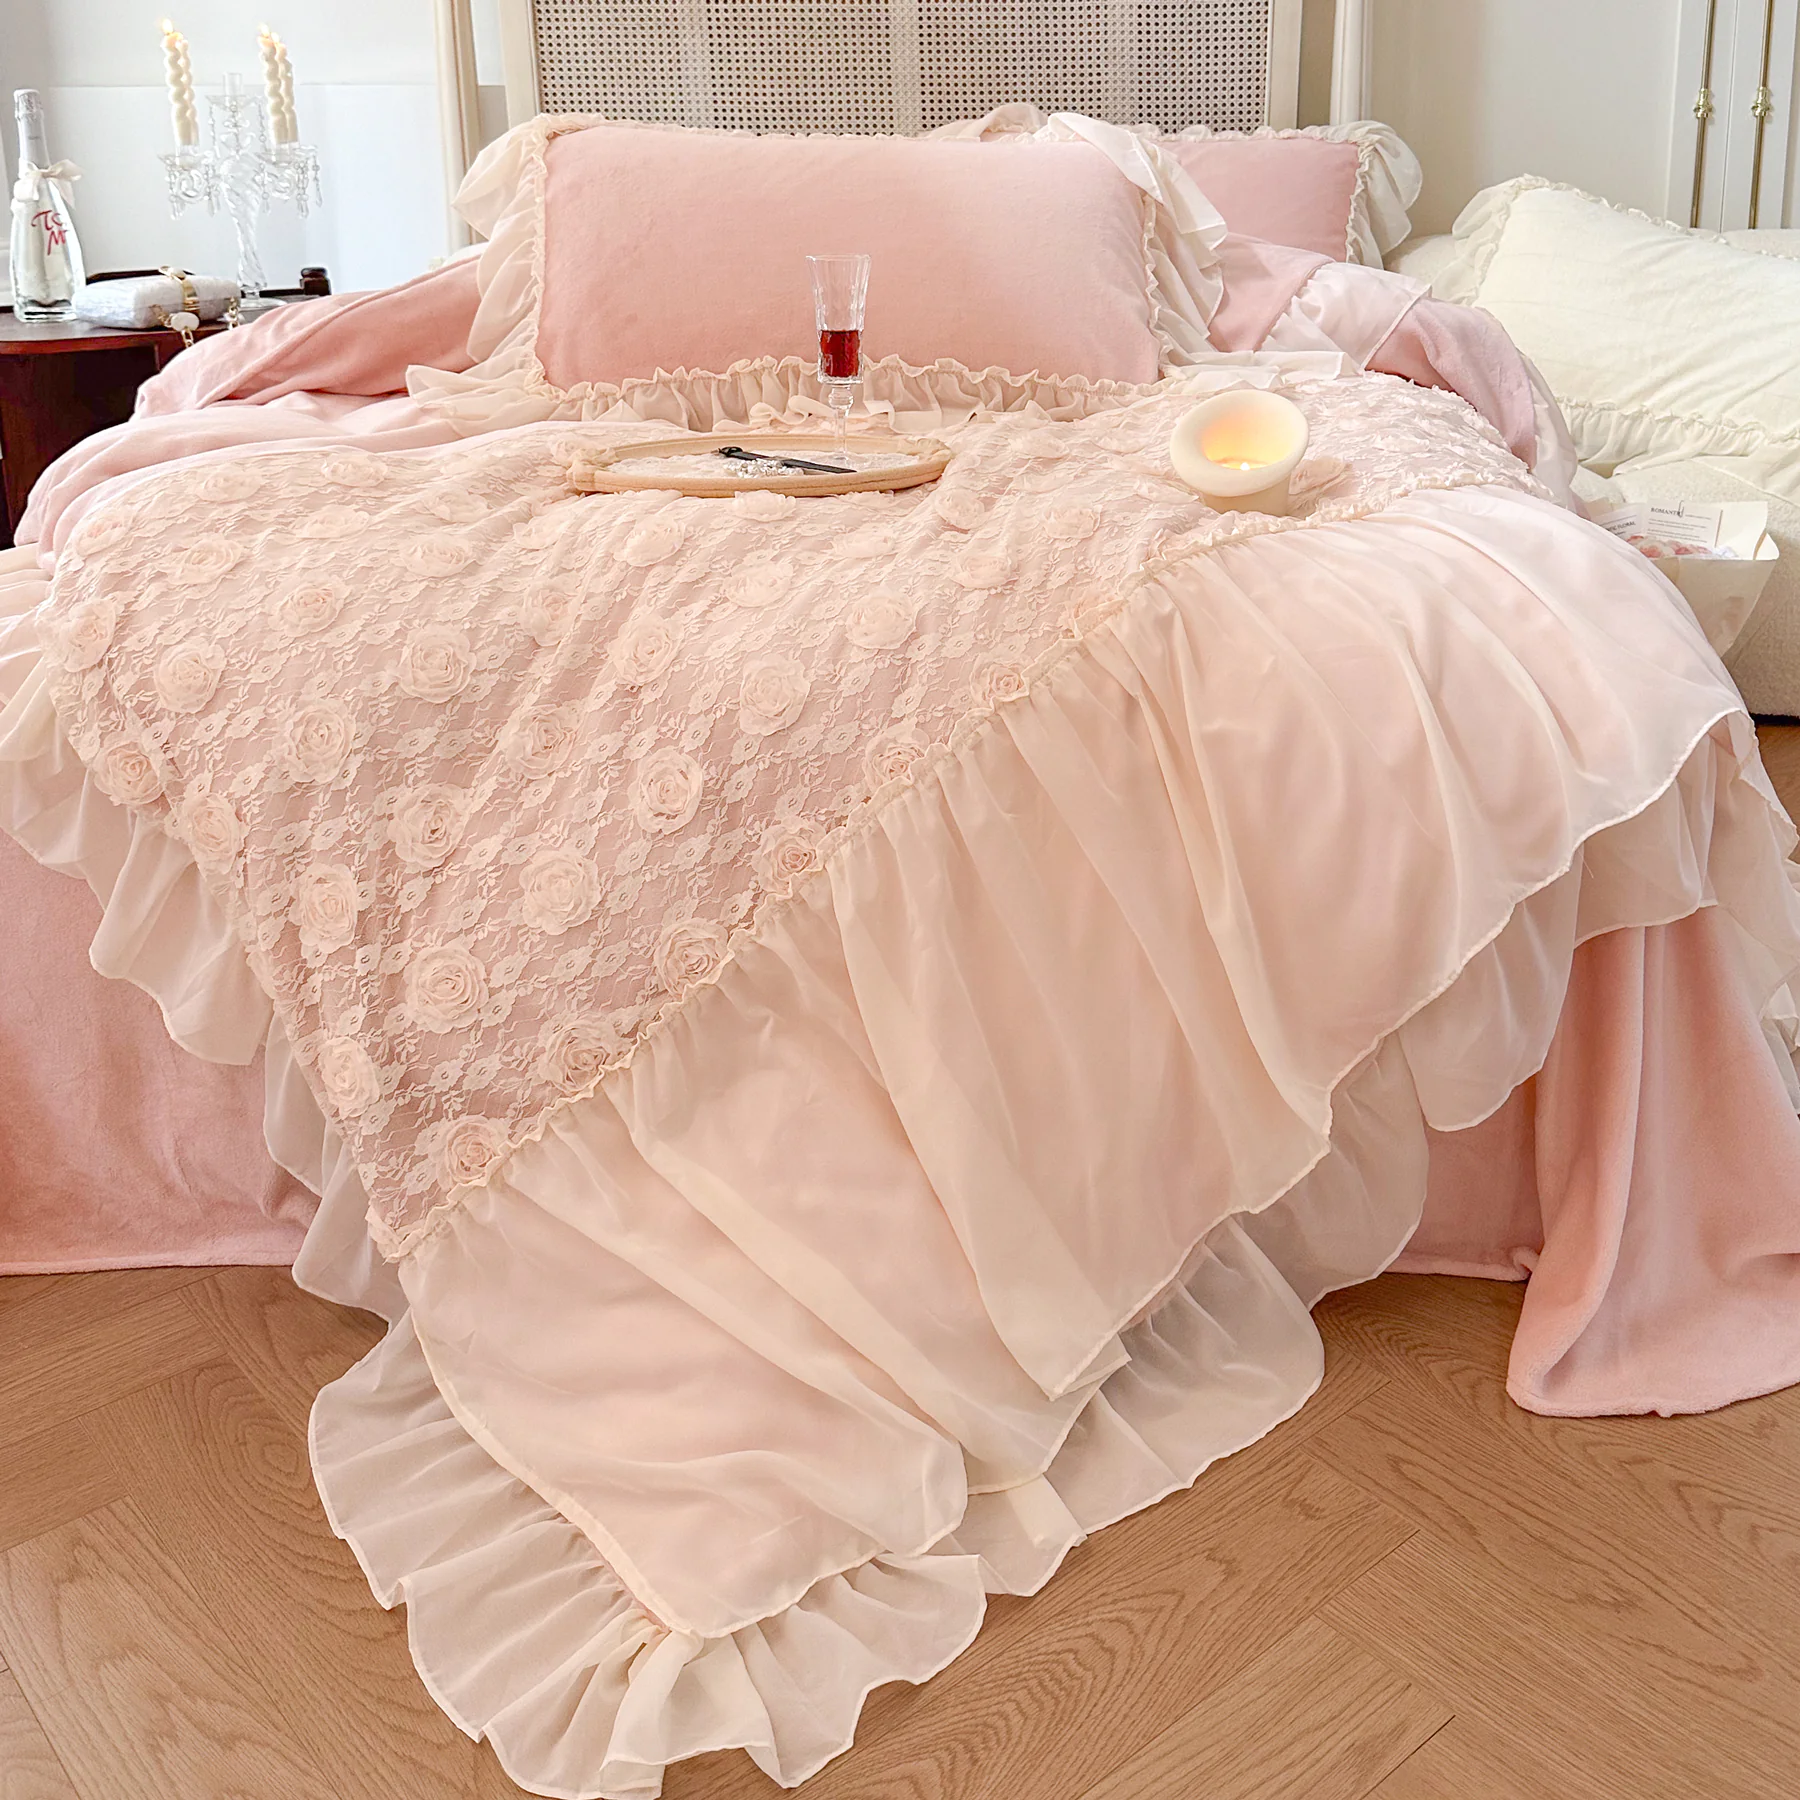 Elegant Milk Fiber Chiffon Lace Flower Duvet Cover Bedding 4 Pcs Set01